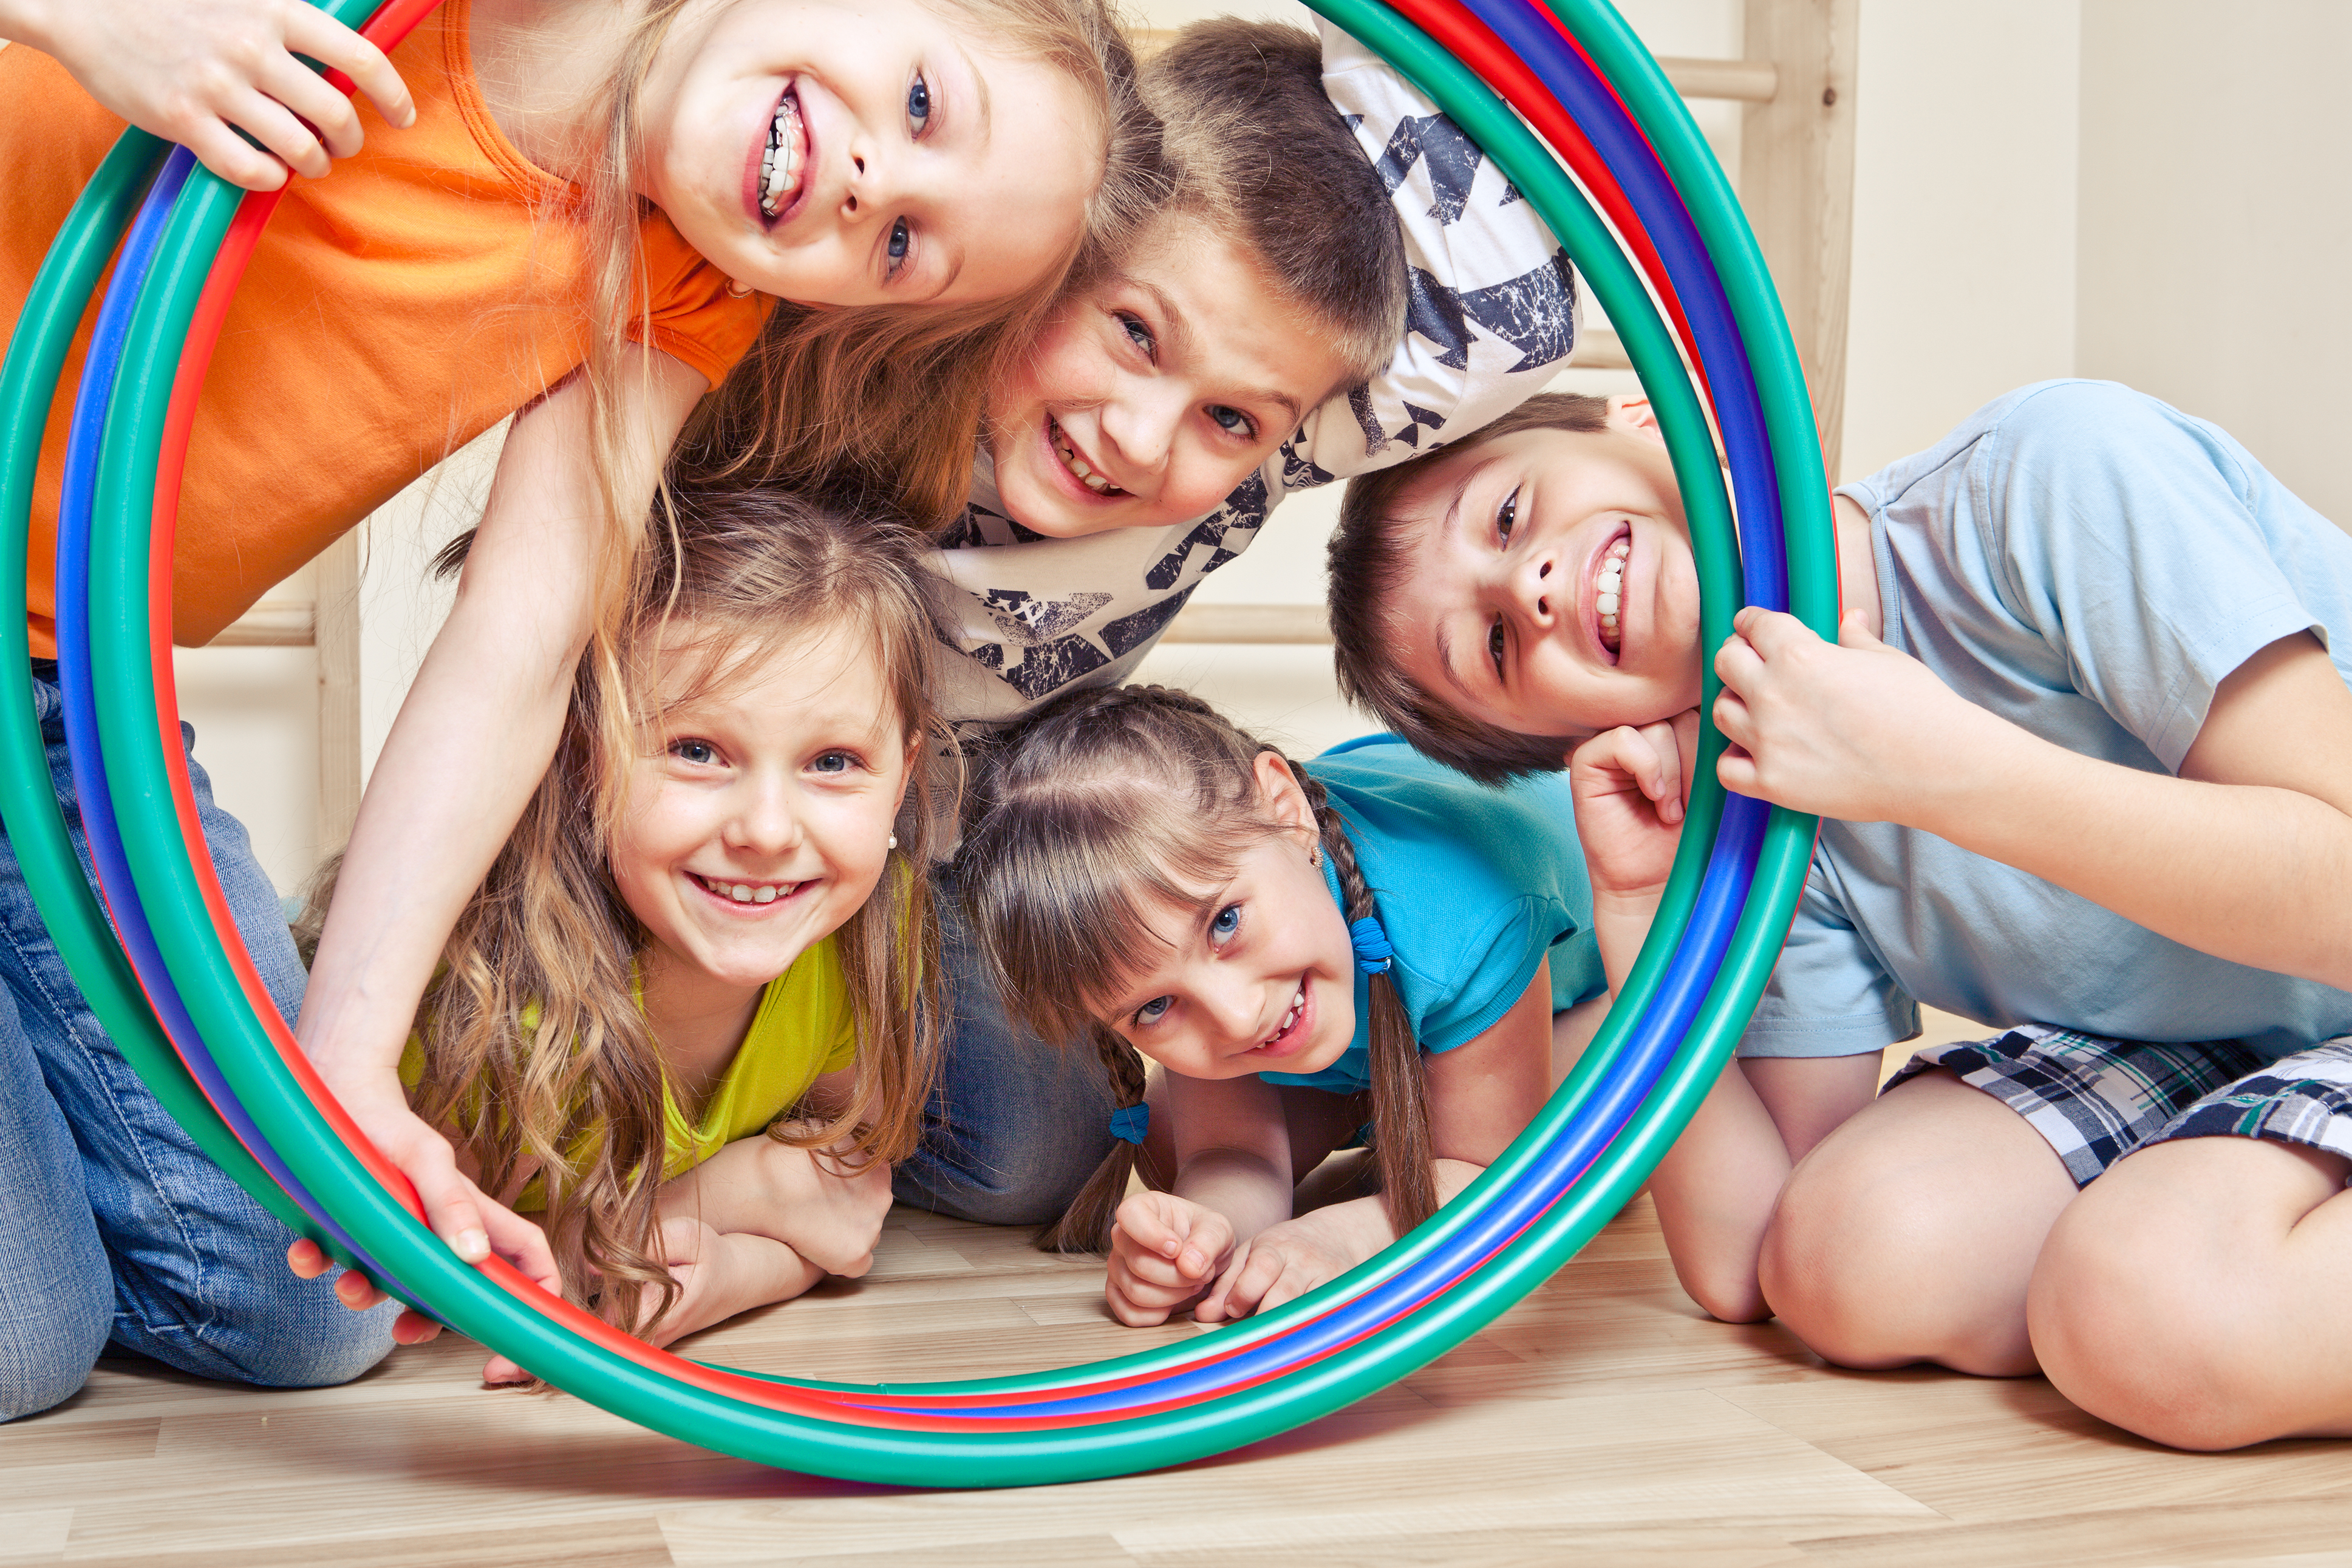 Group of children smiling, looking through hula hoop